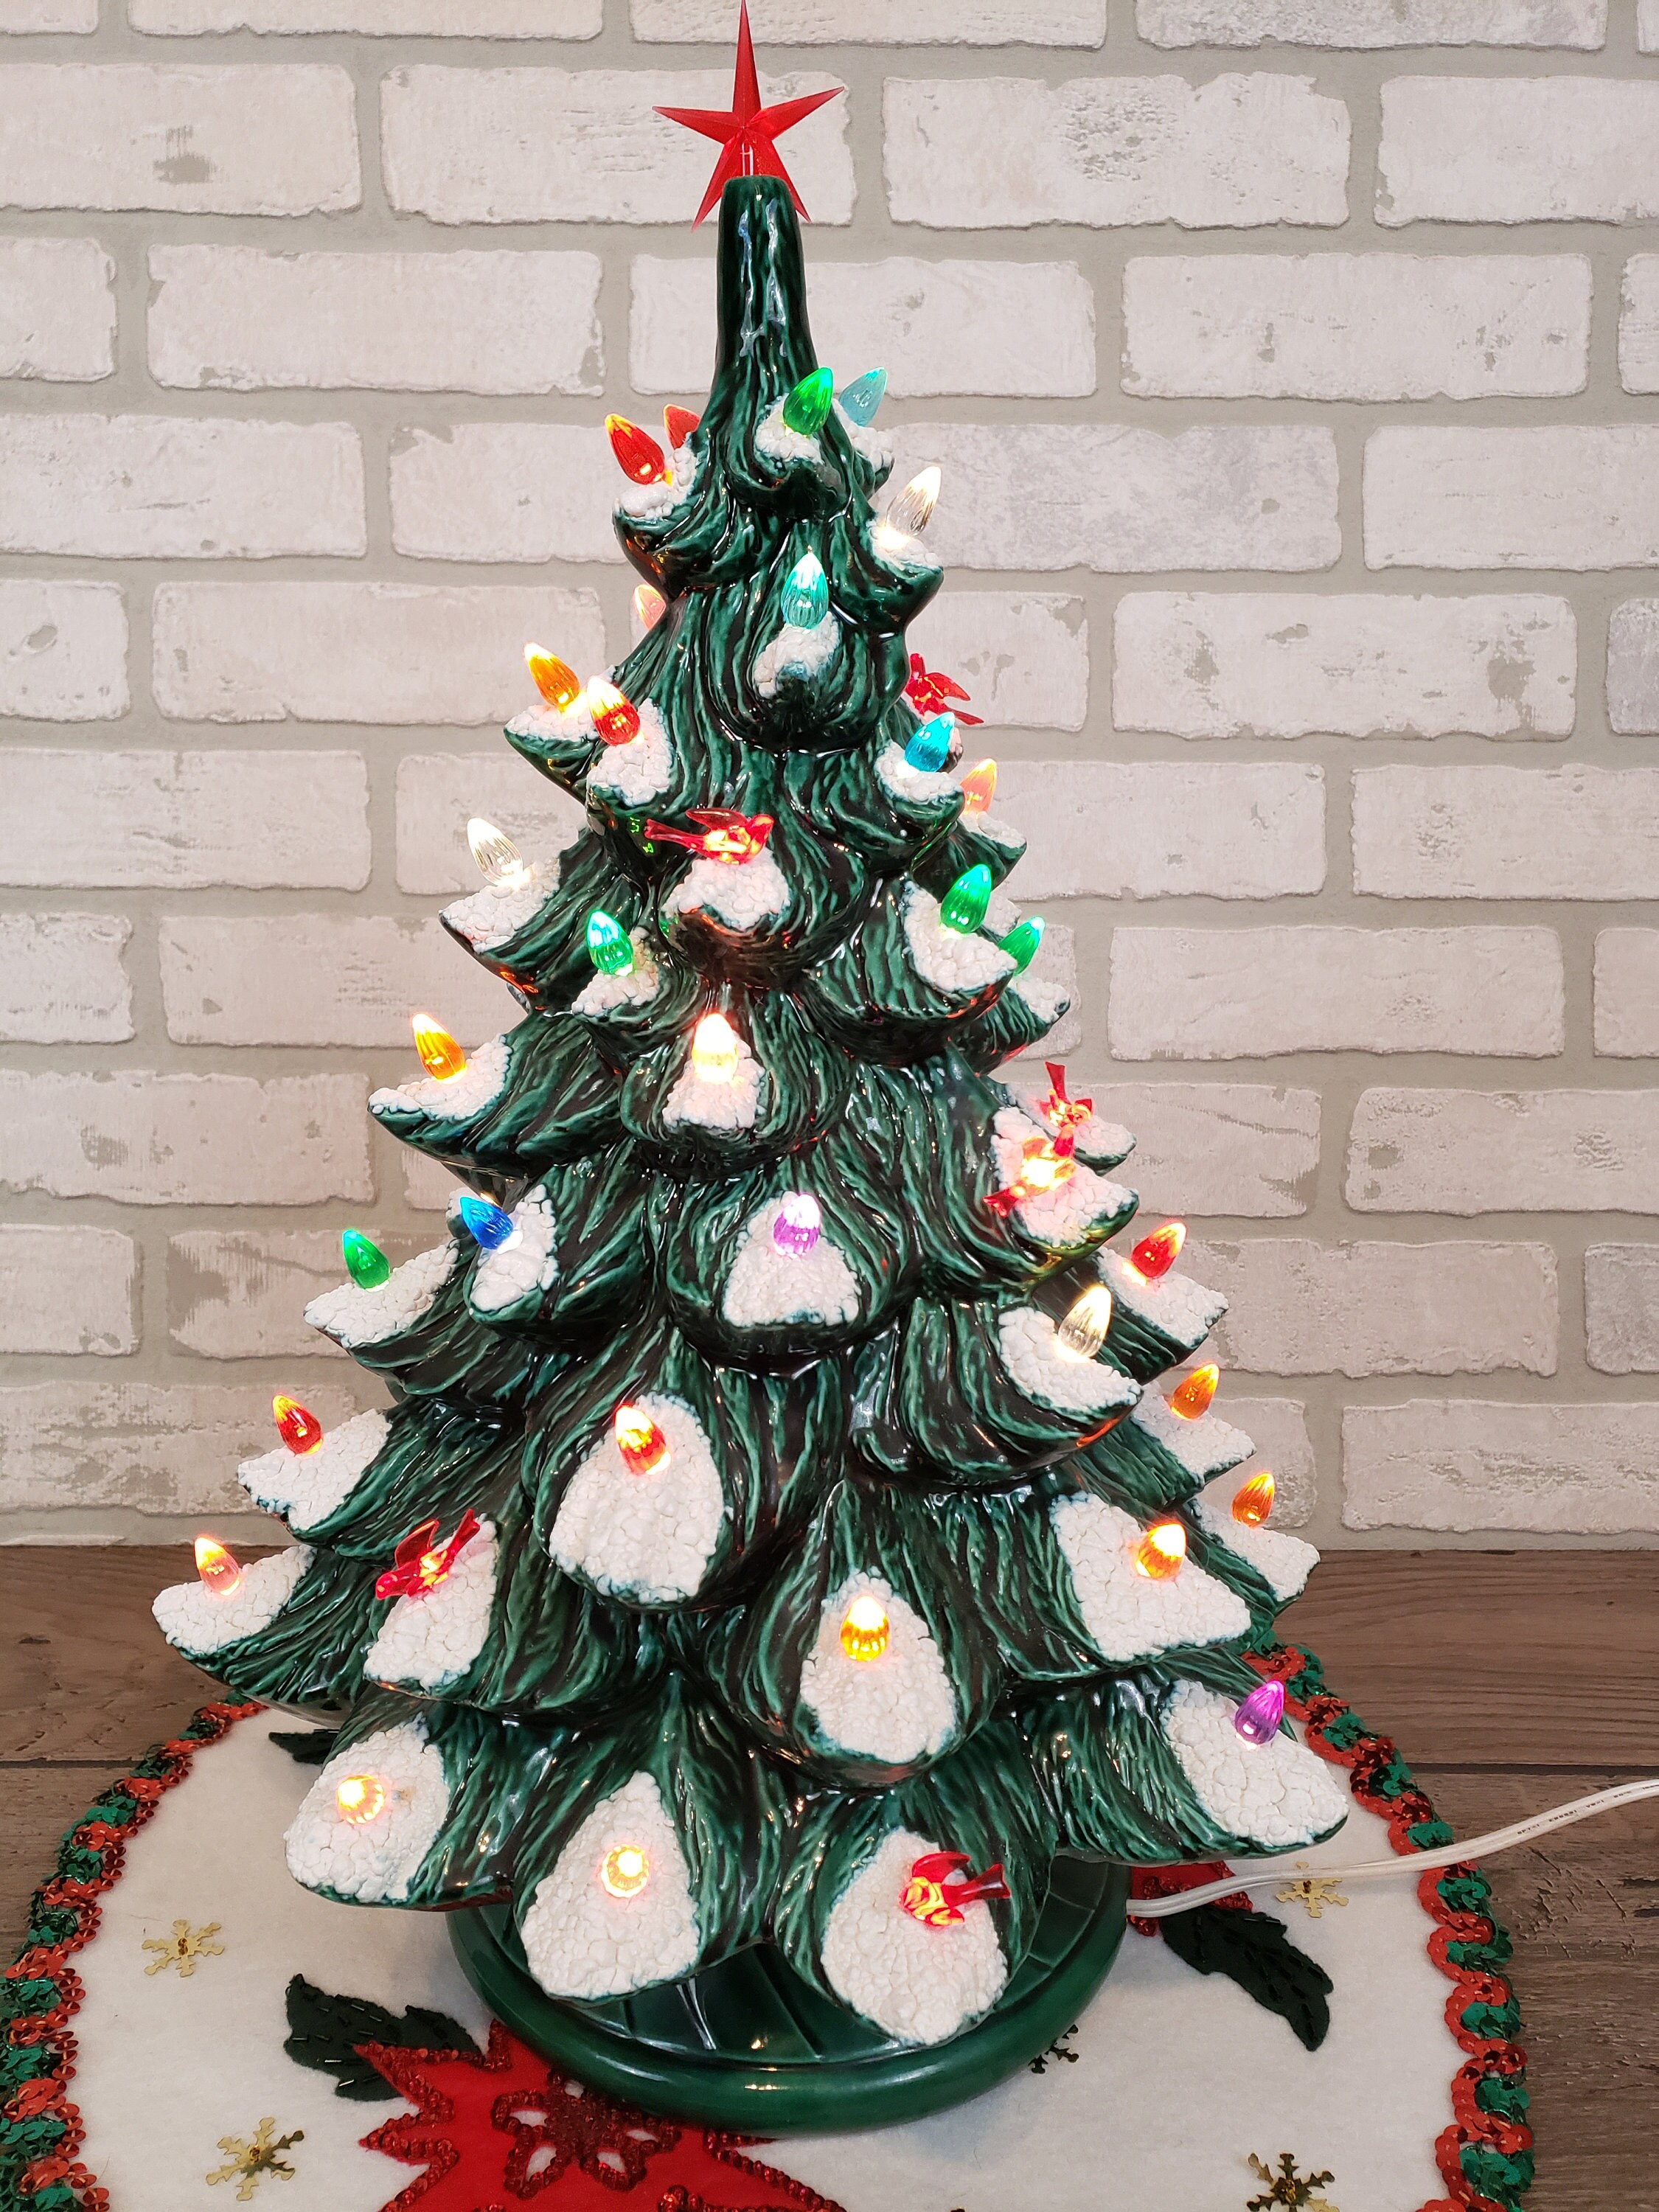 19 White w/ purple doves Ceramic Christmas Tree by ArtsonFirePlano